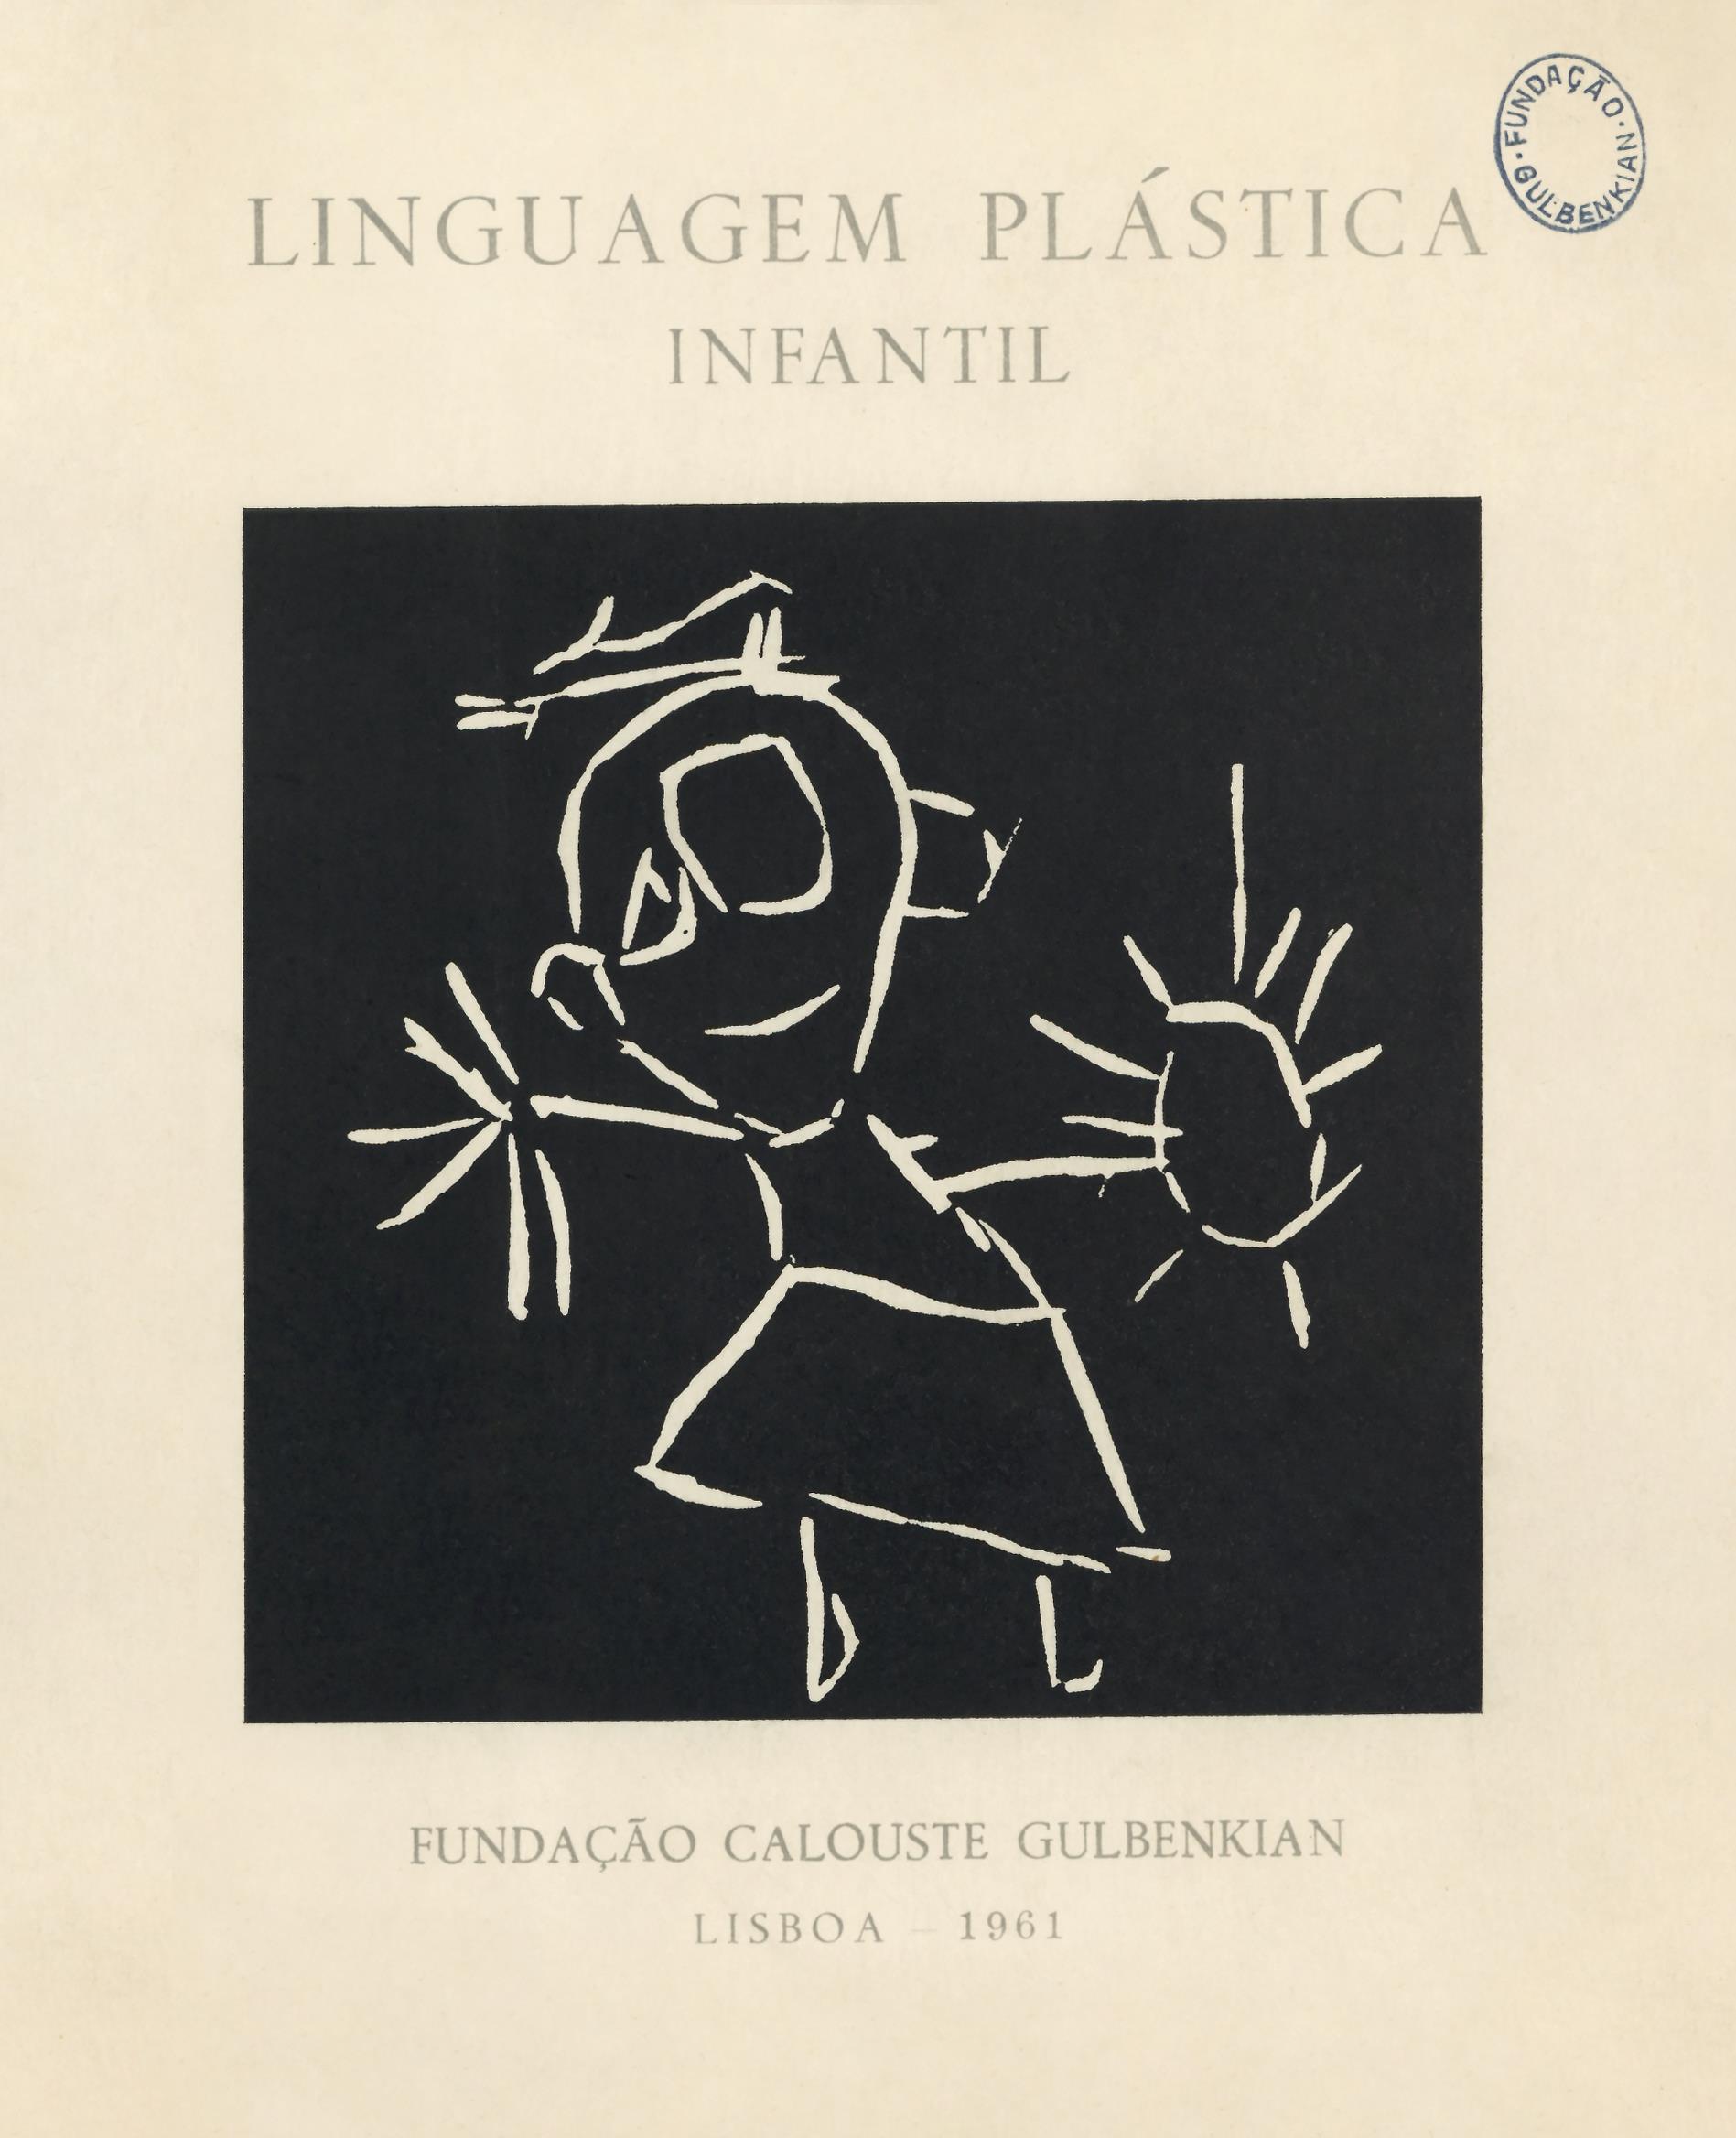 1961_Linguagem_Plastica_Infantil_Catalogo_AHP2416.3